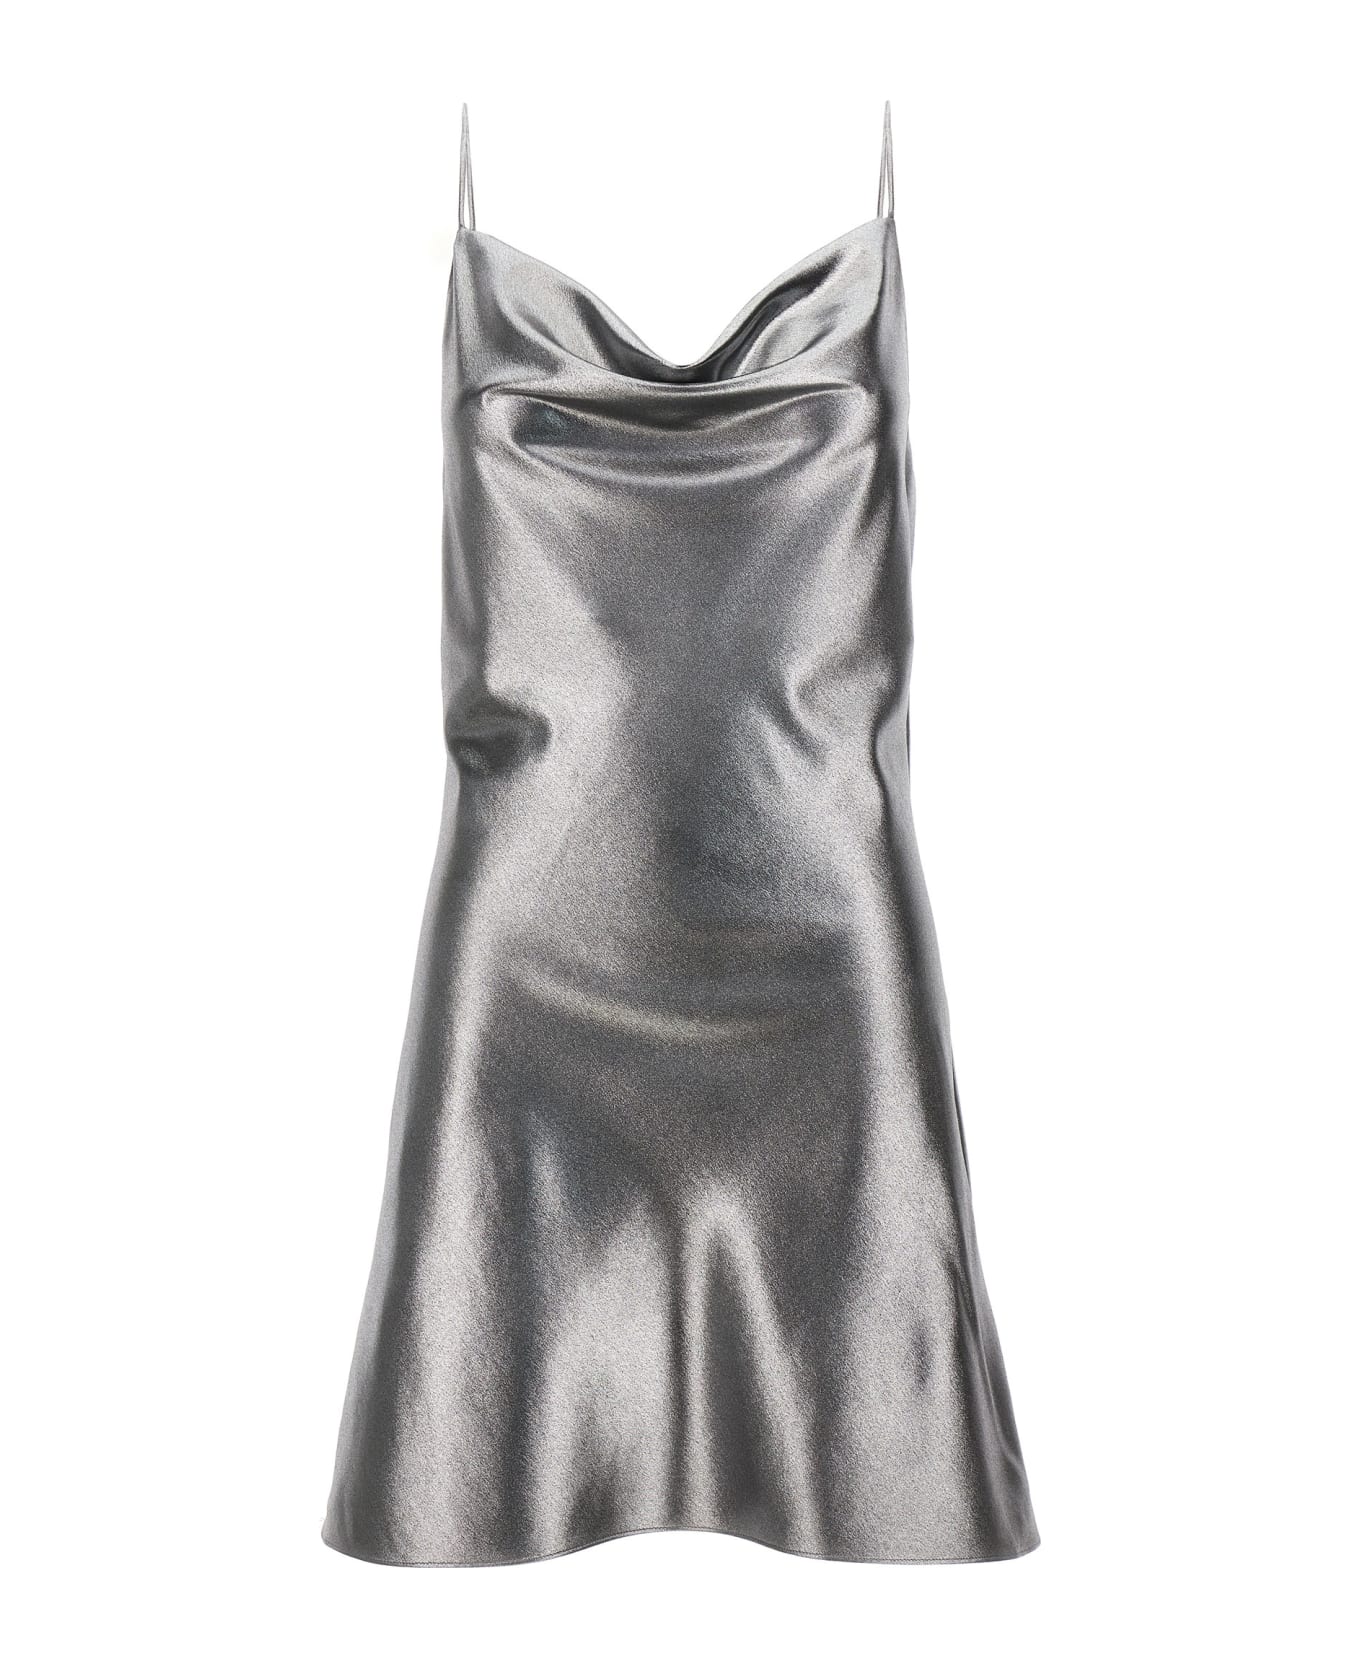 Rotate by Birger Christensen 'slip Dress' Mini Dress - Silver